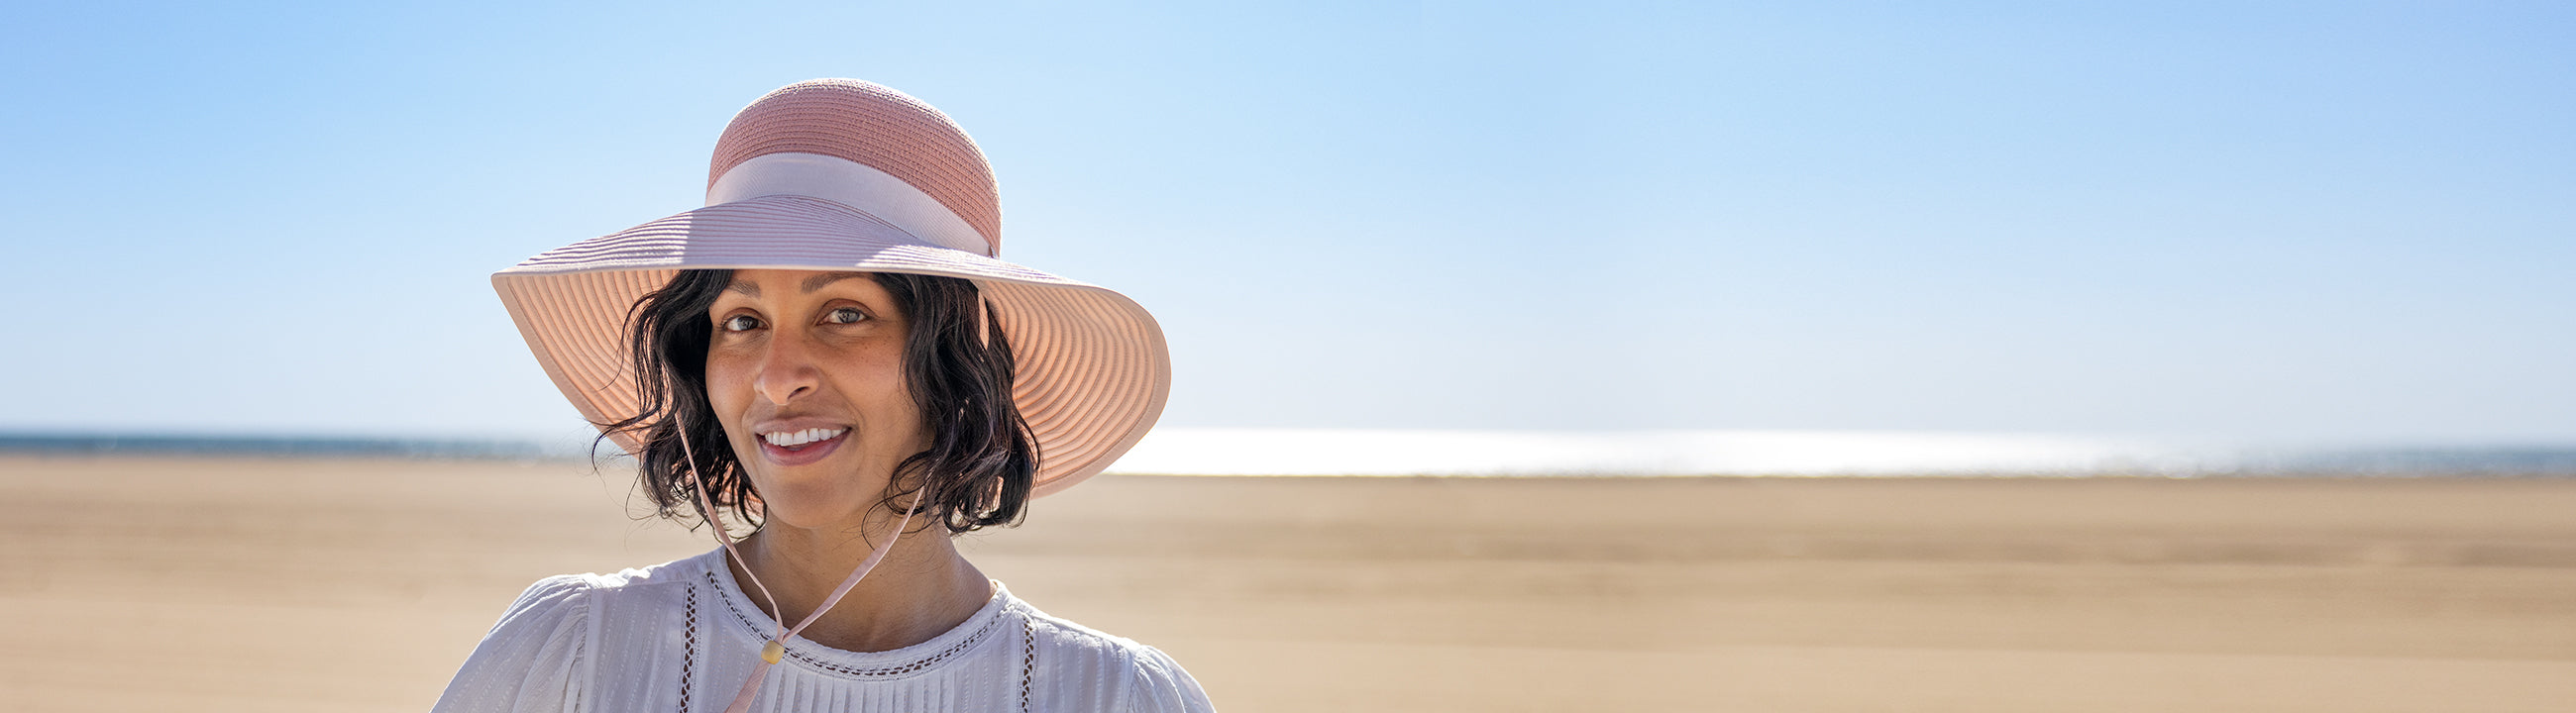 Black Sunshade Hat - Buy Women's Outdoor Beach Sun Hats